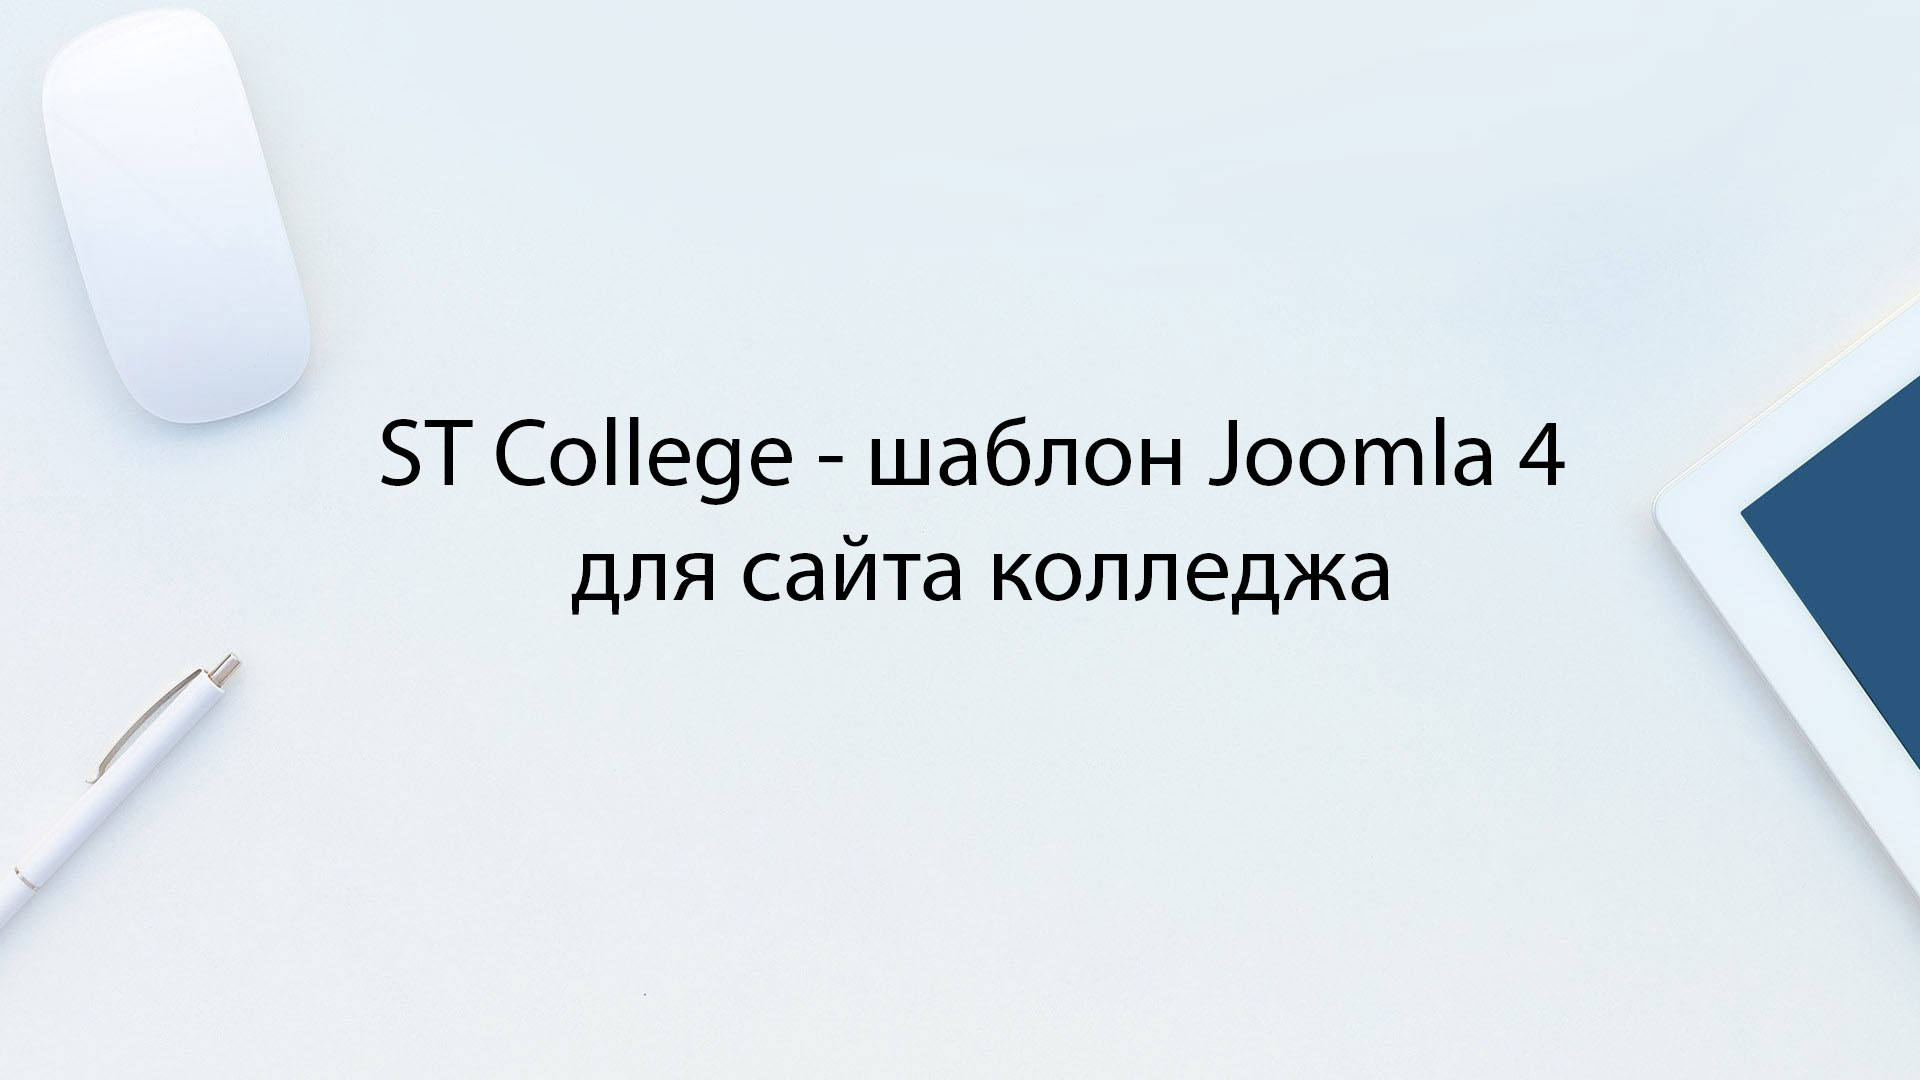 ST College - шаблон Joomla 4 для сайта колледжа